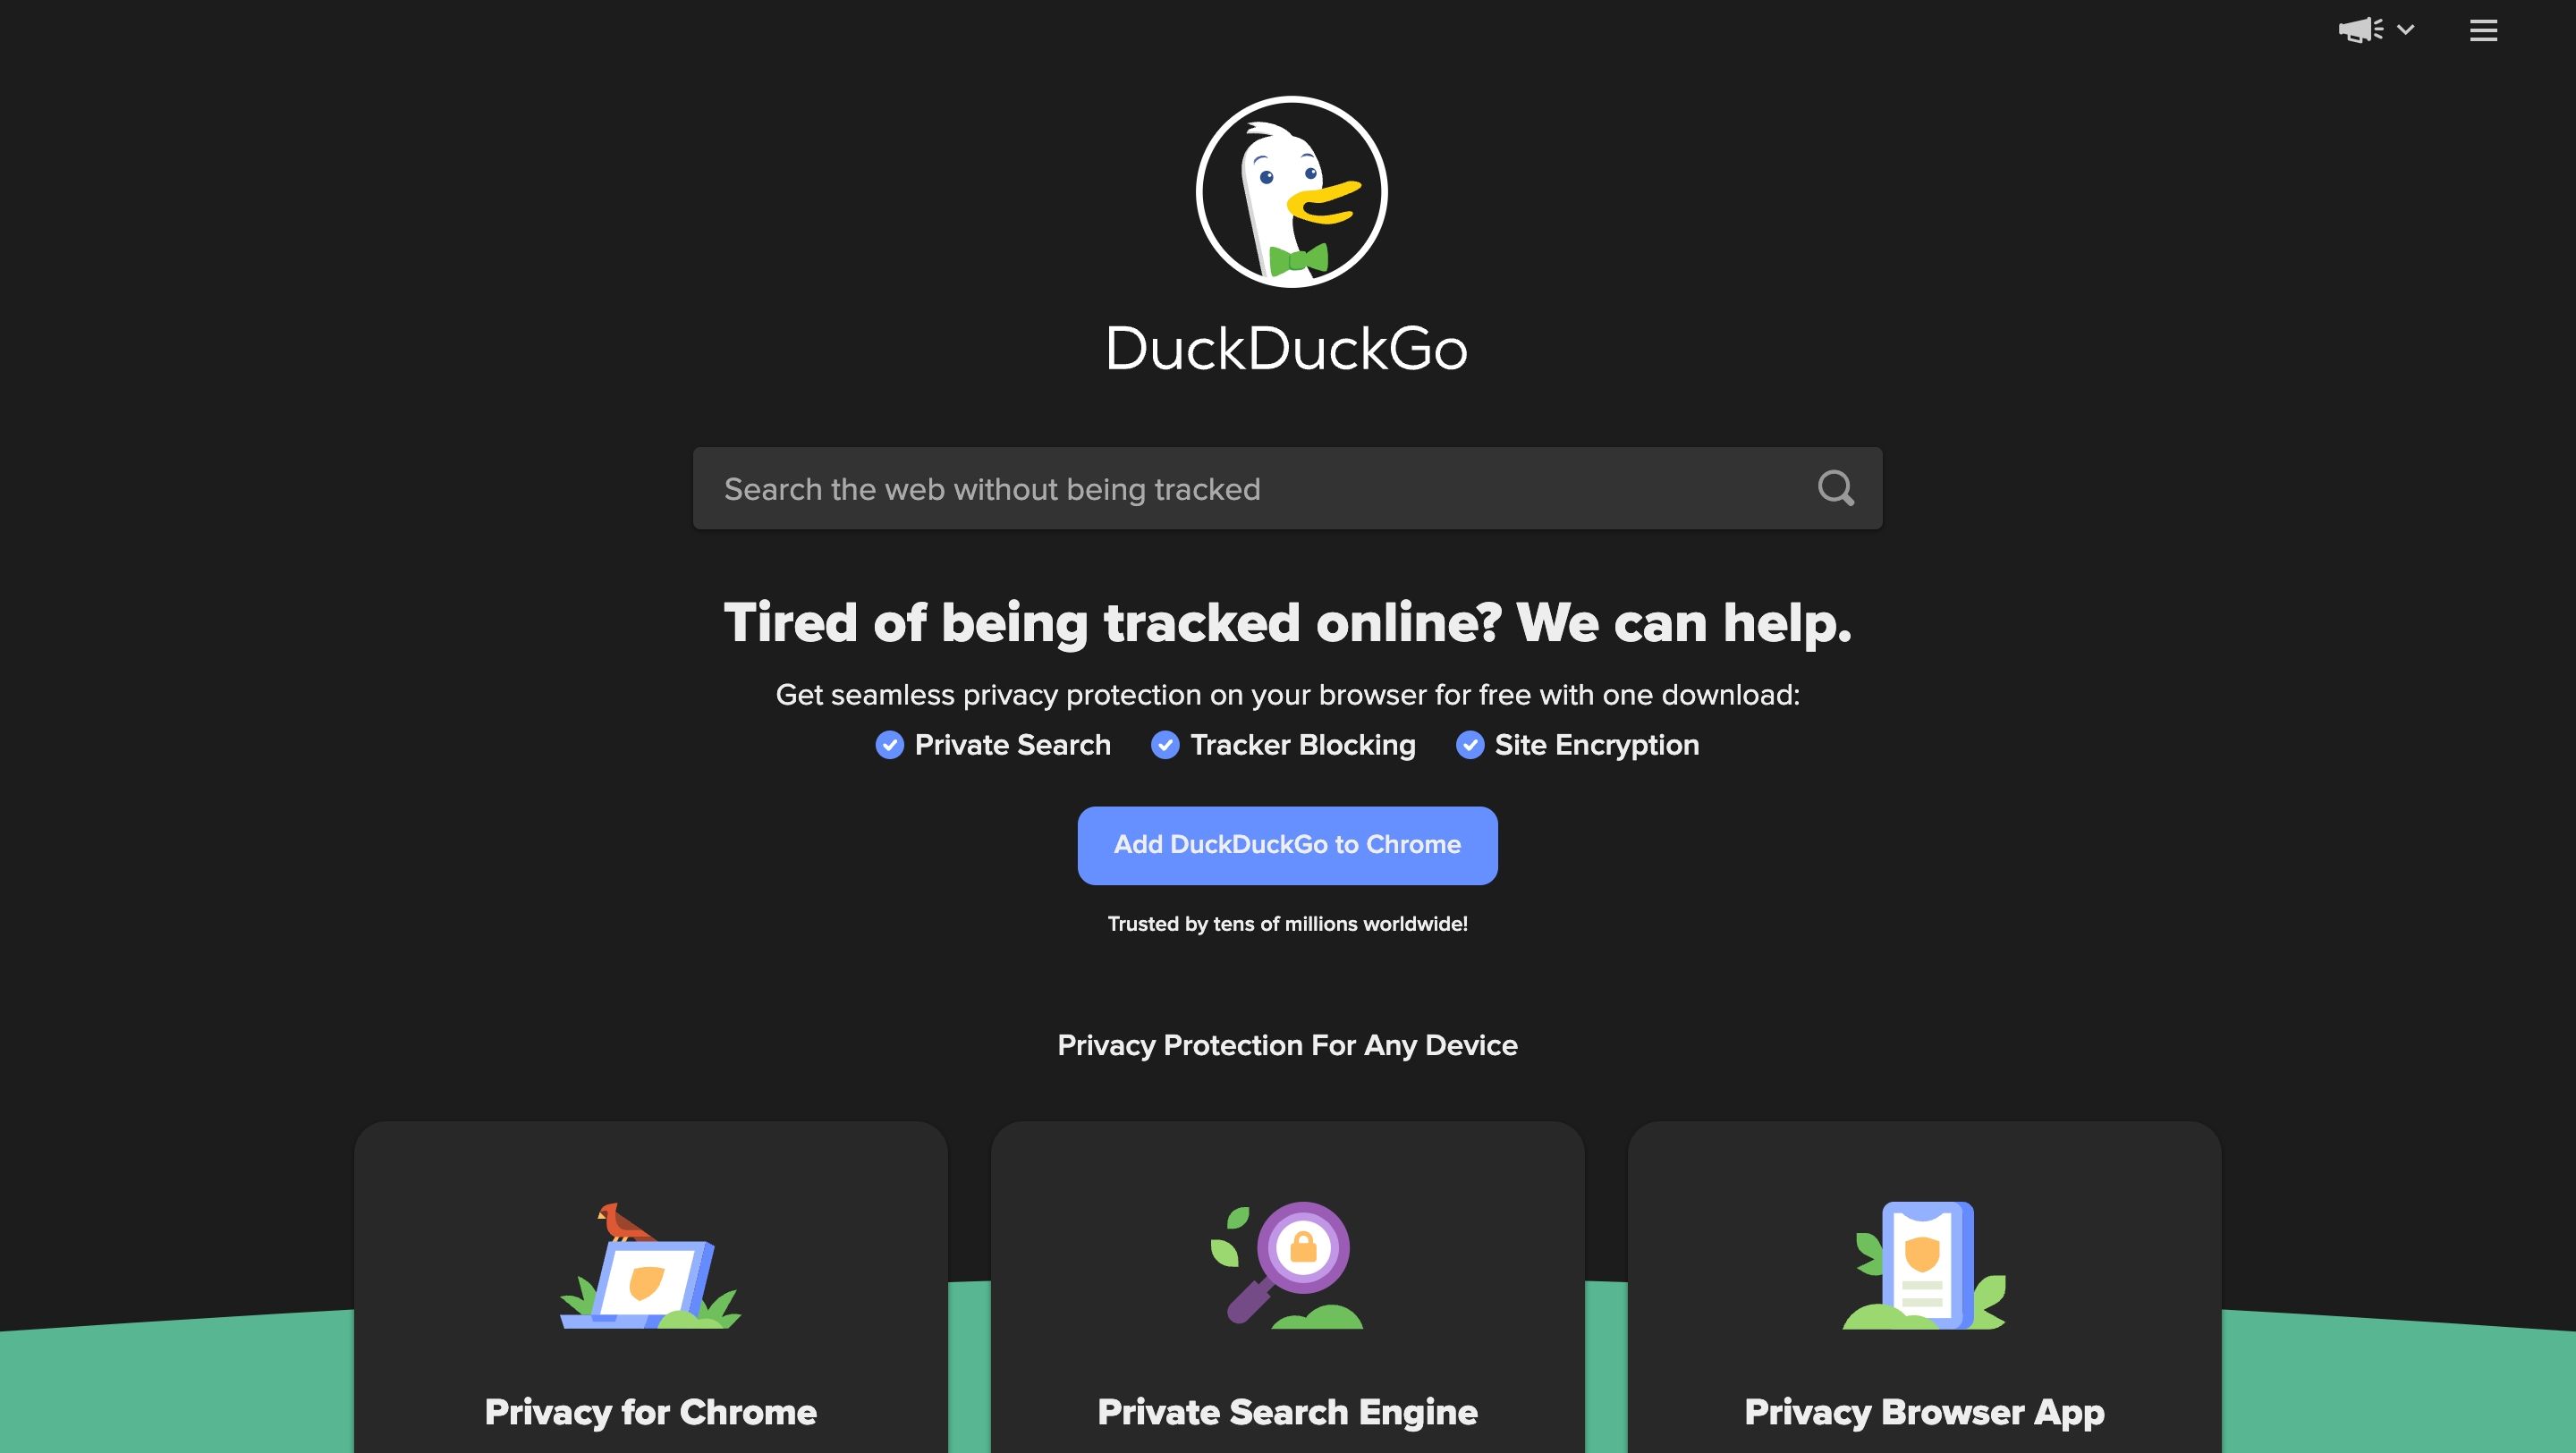 DuckDuckGo search engine home page